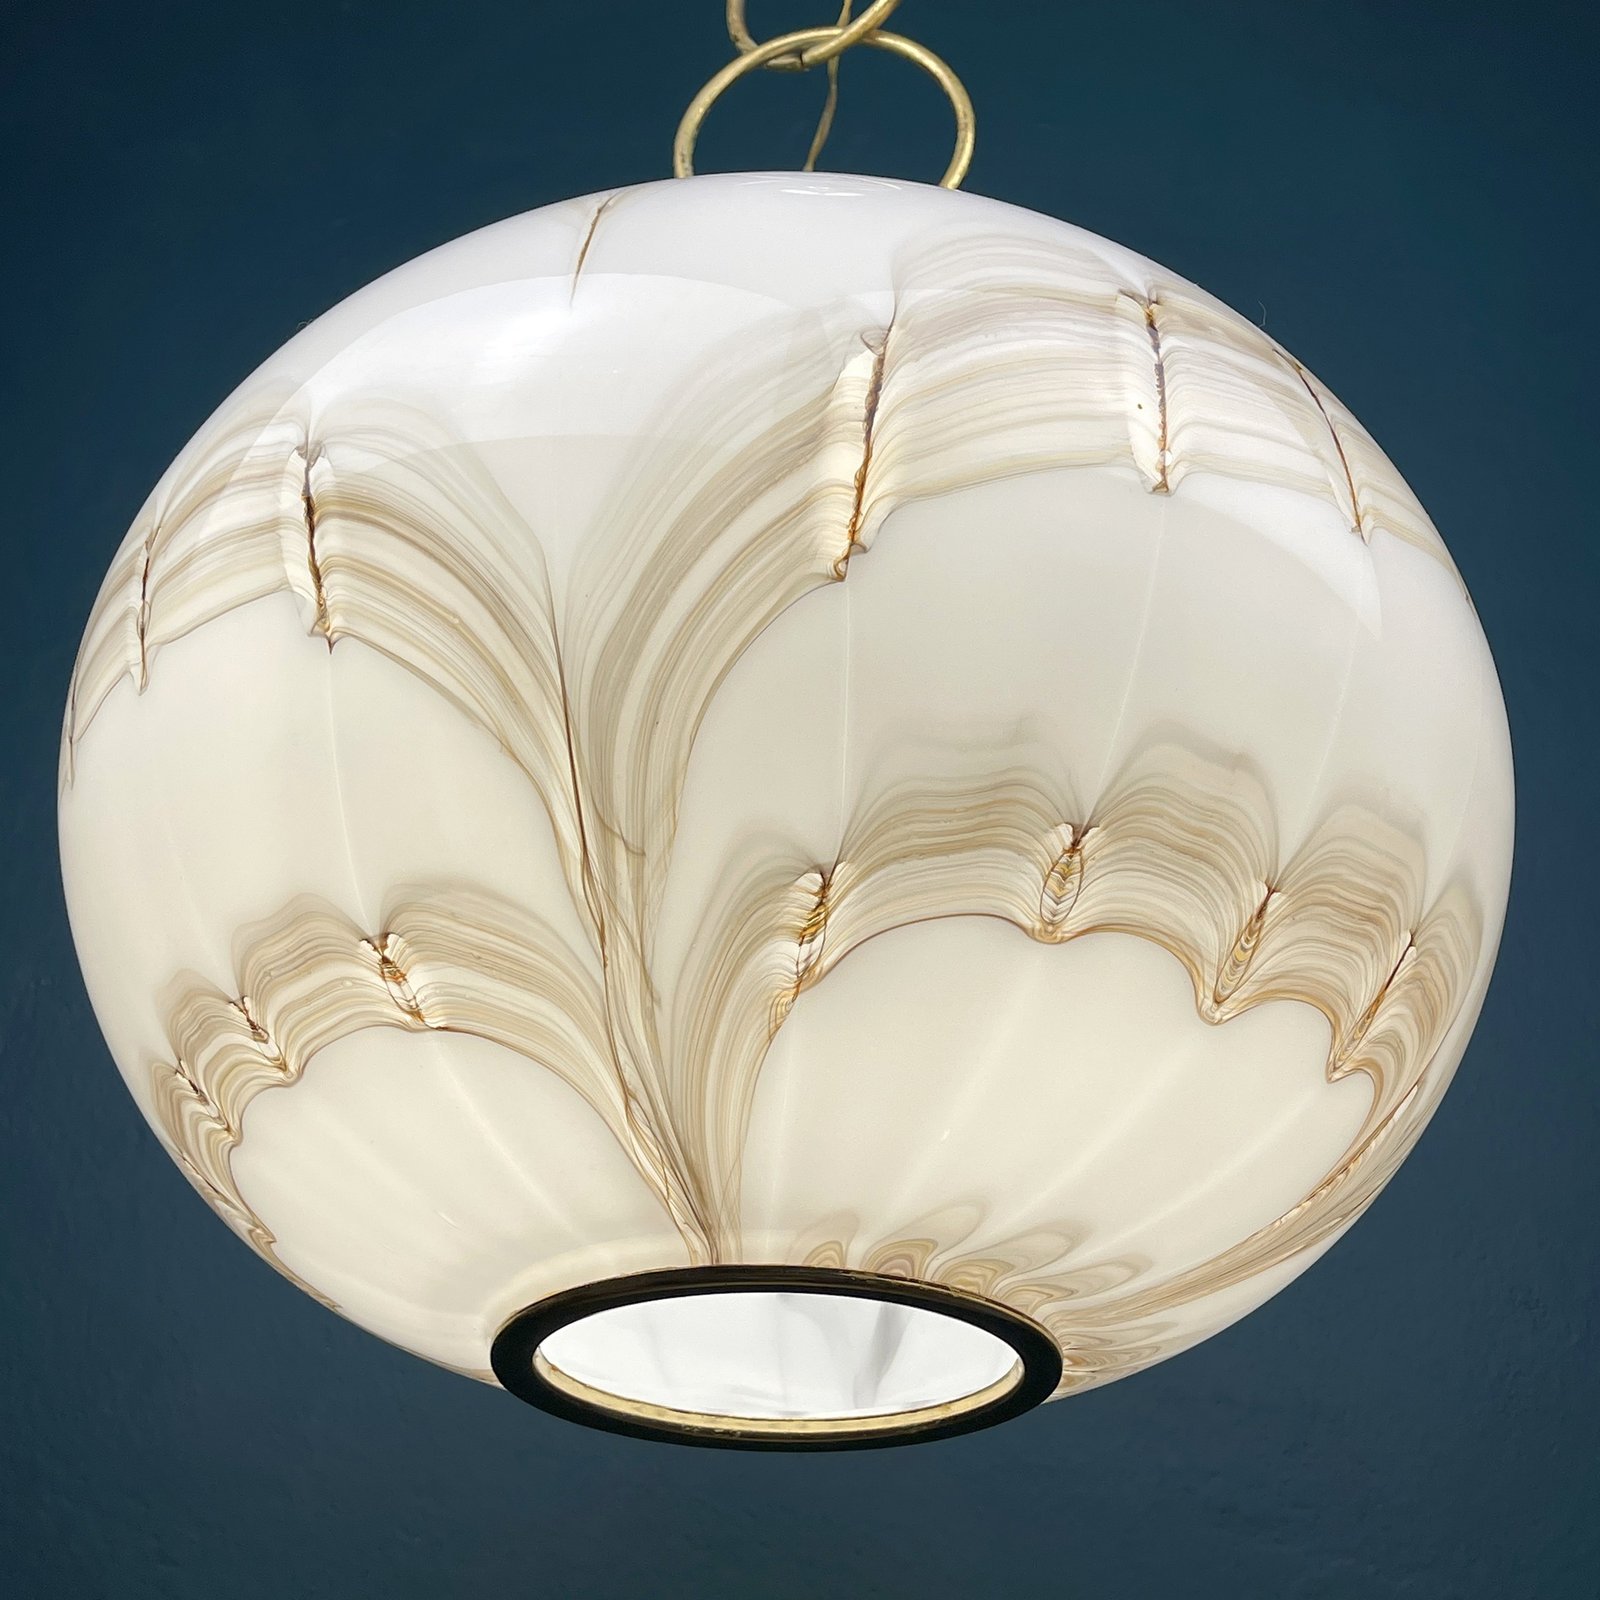 Murano pendant lamp Italy 1960s Mid-century modern lighting